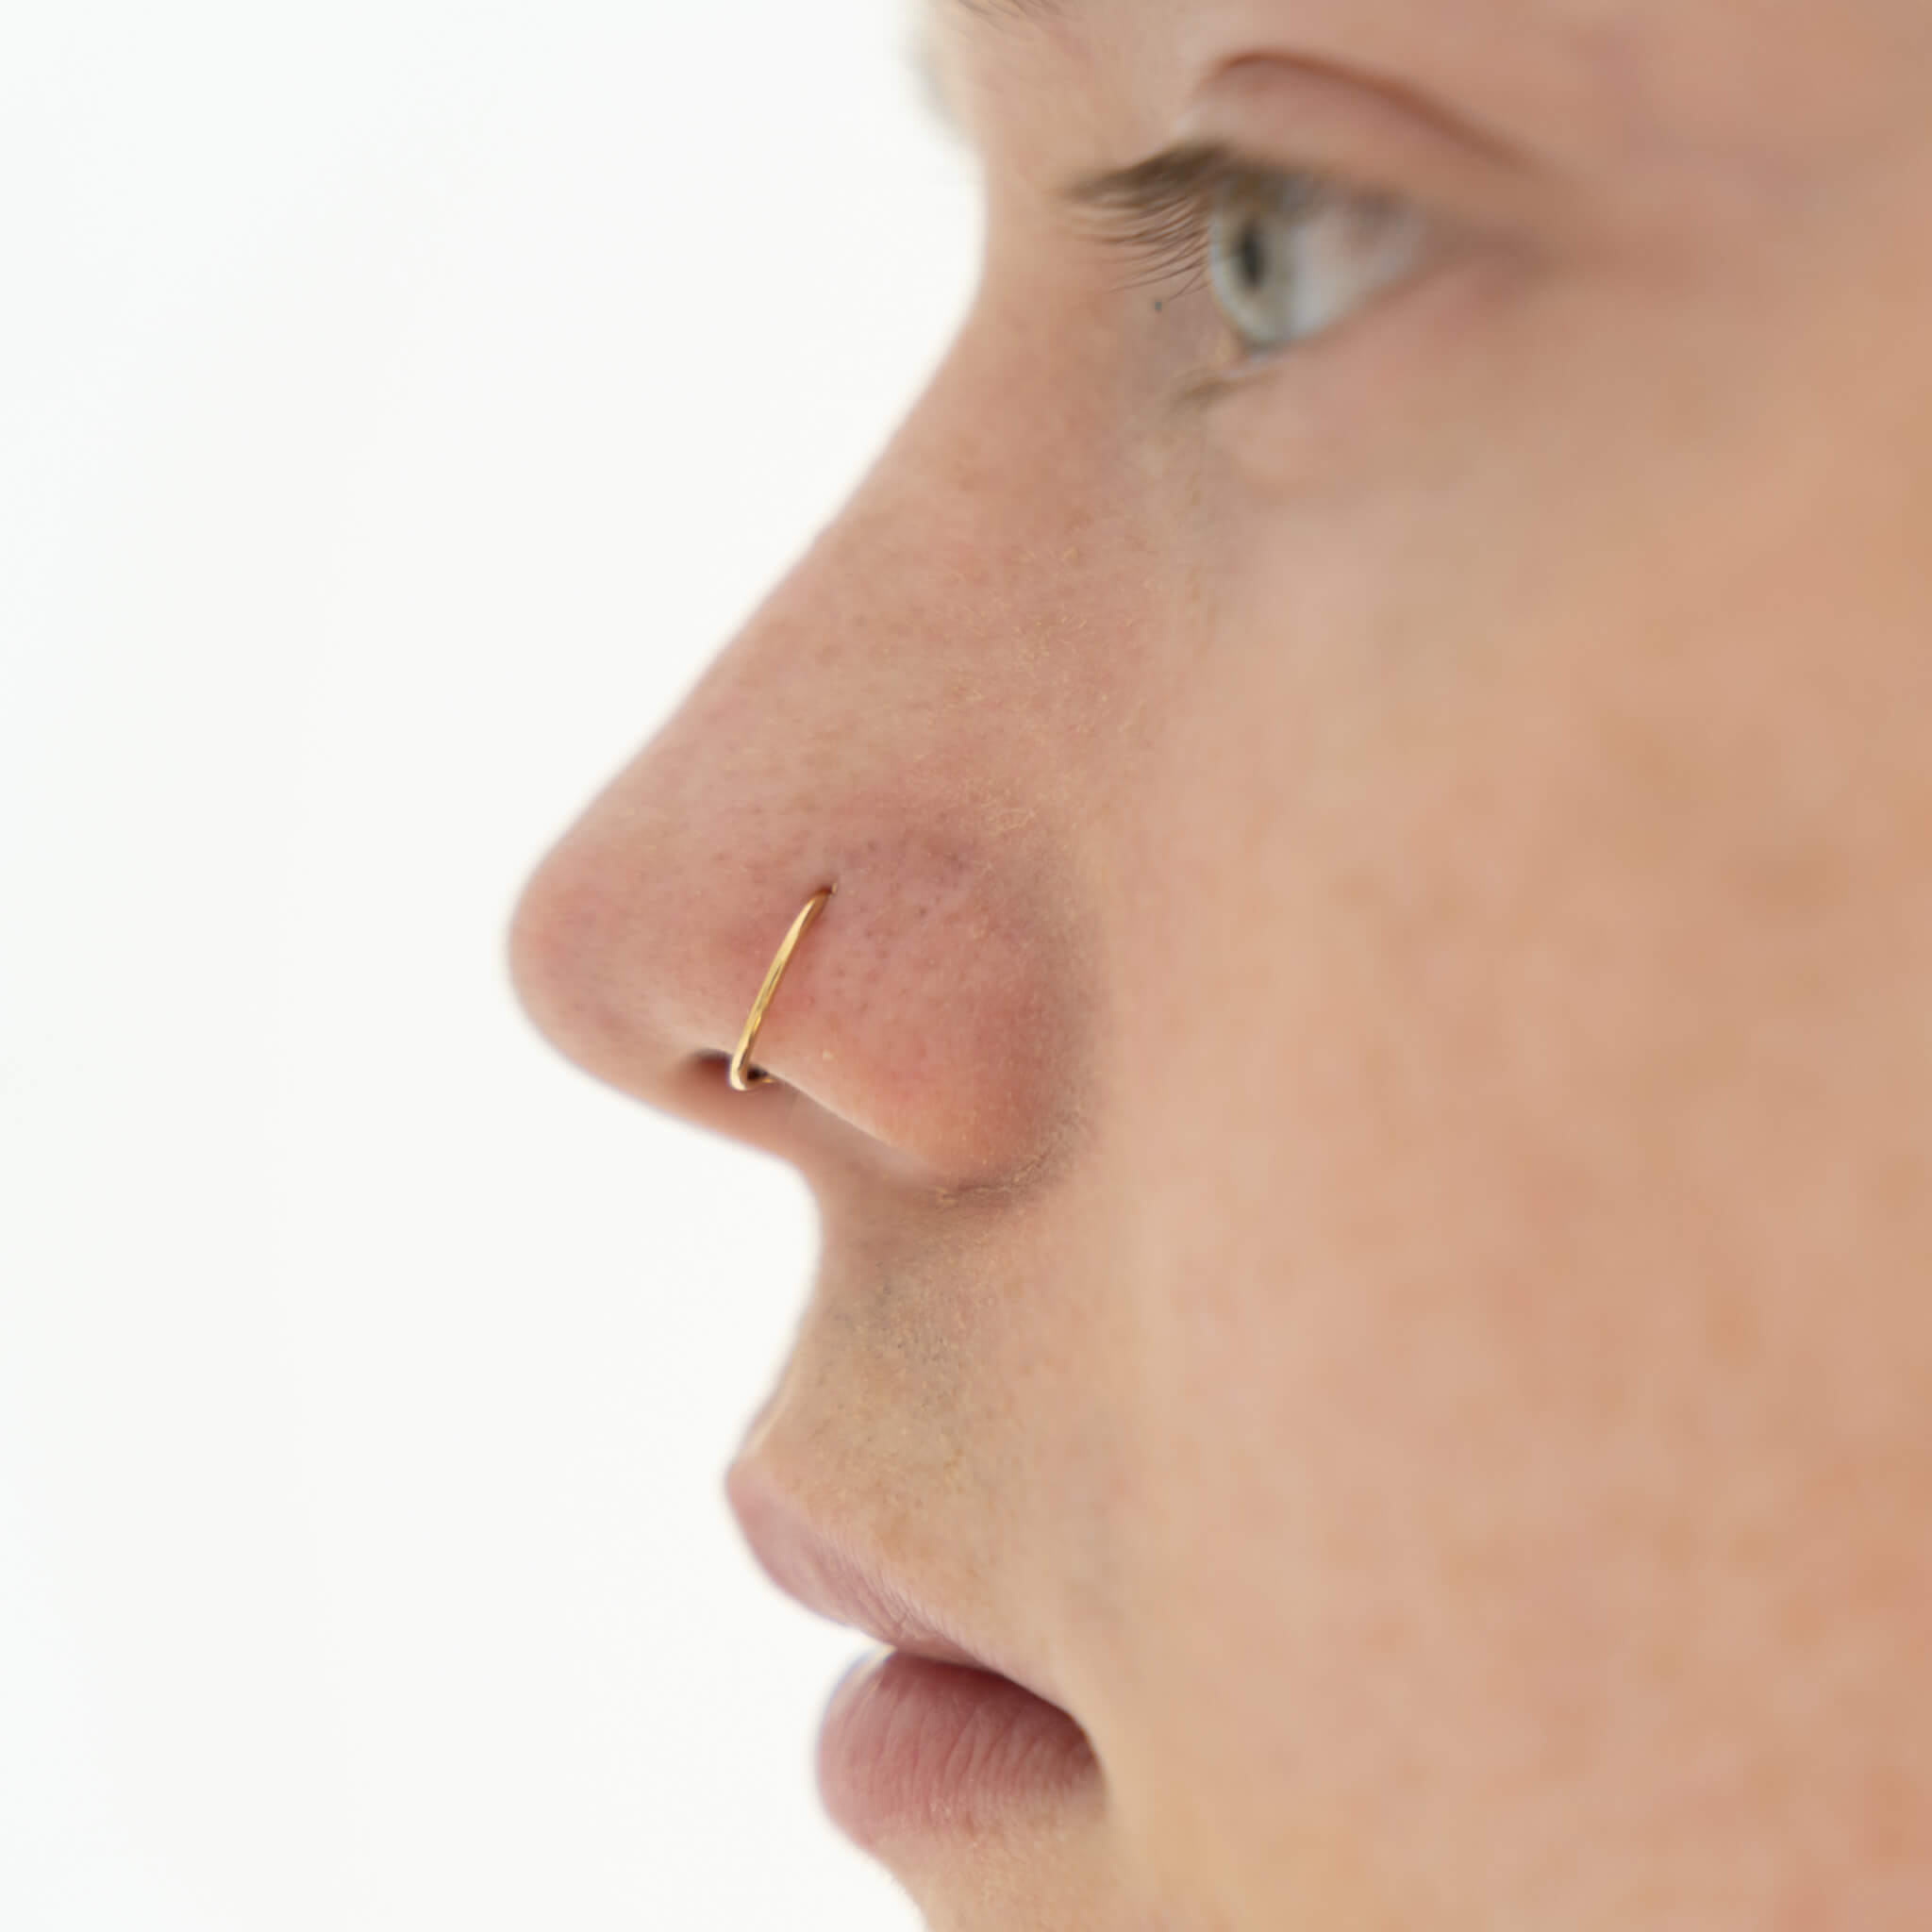 Buy GtcGems Diamond Nose Pin For Women 24K Gold Pure D Color Hire Ki Nose  Pin Original Certified डायमंड नोज पिन Attractive & Adored Look Gold Ki Nose  Pin हीरे की नोज